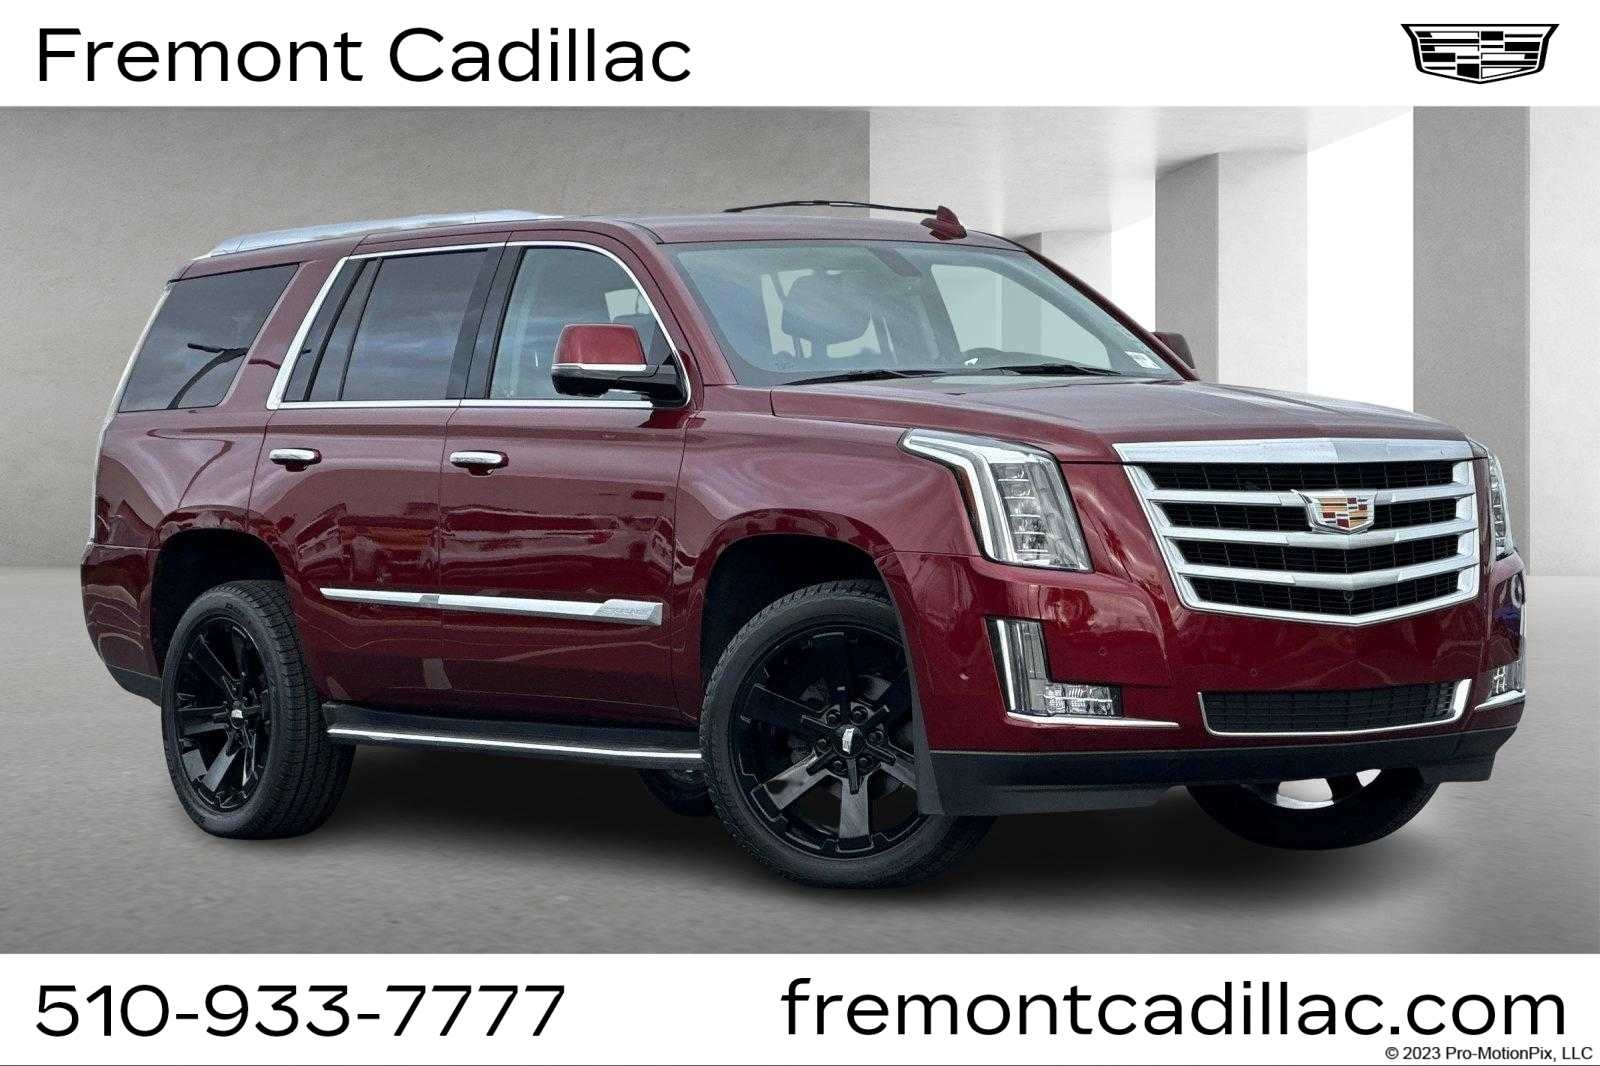 2020 Cadillac Escalade Fremont CA